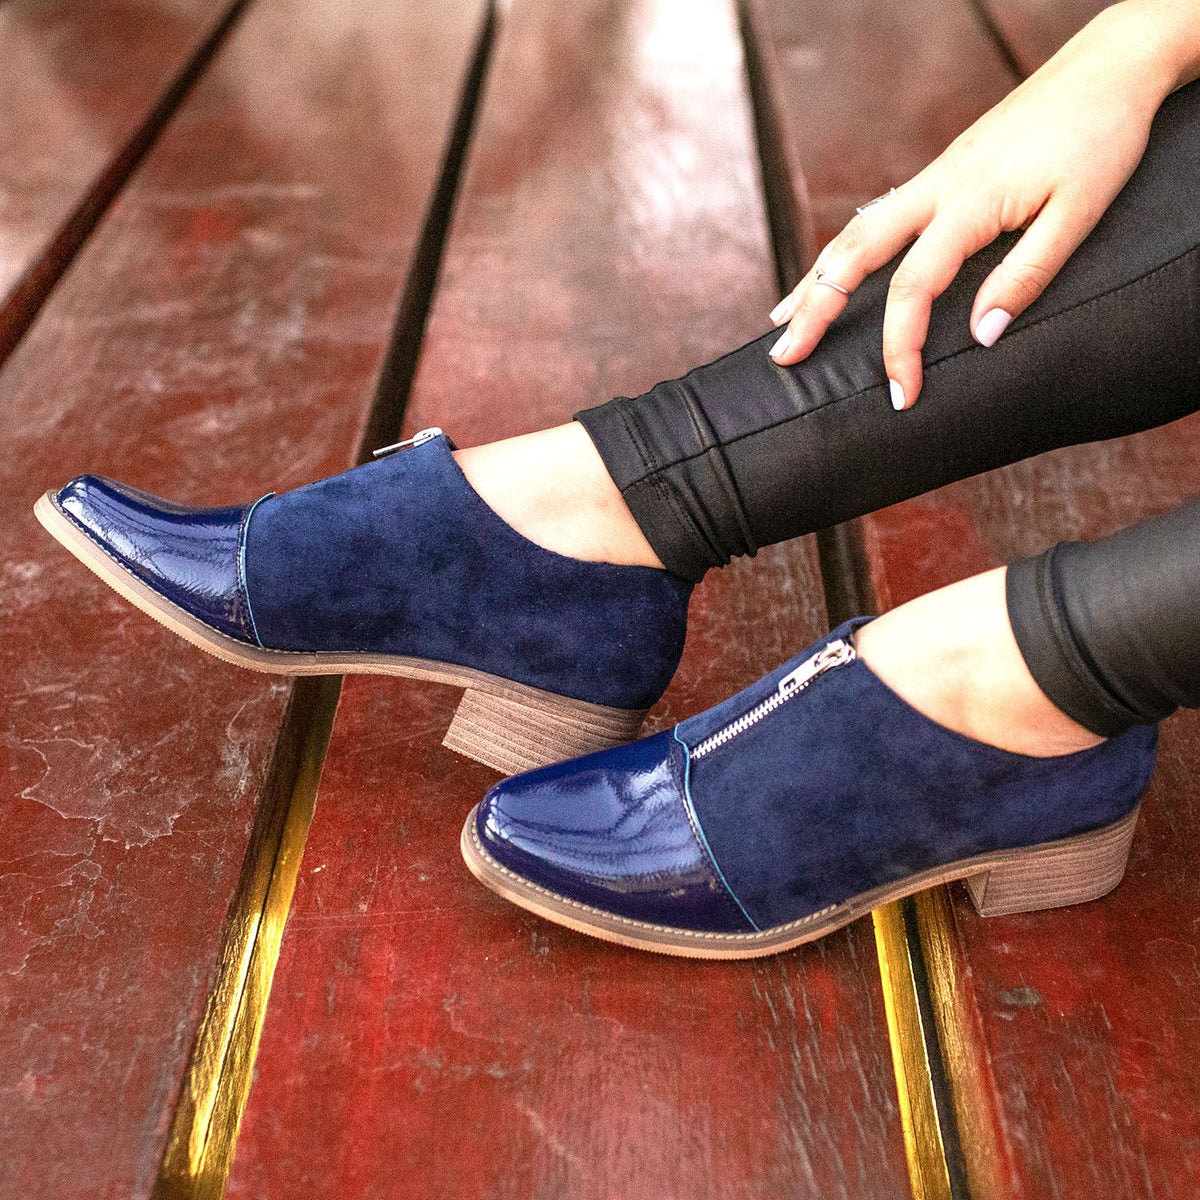 Zapato Charol Azul Mujer 87159